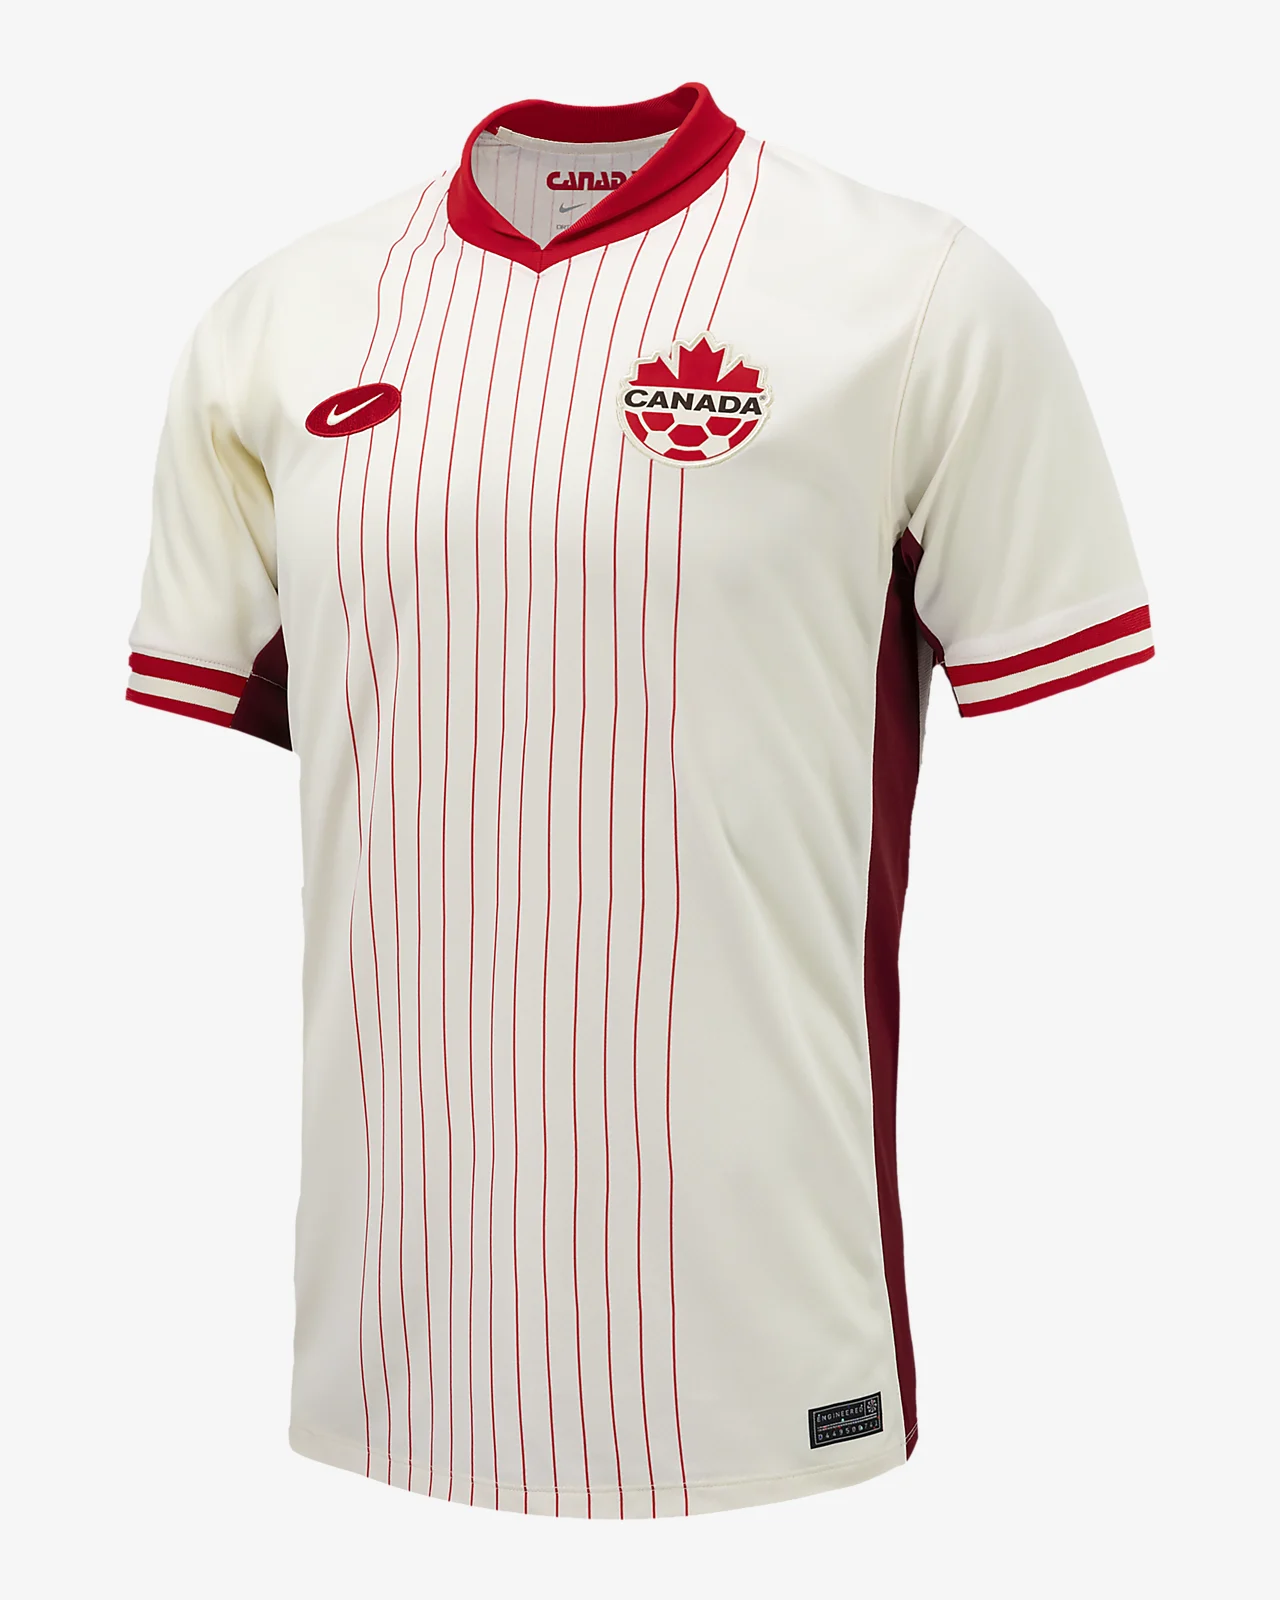 Canada - Copa America away jersey